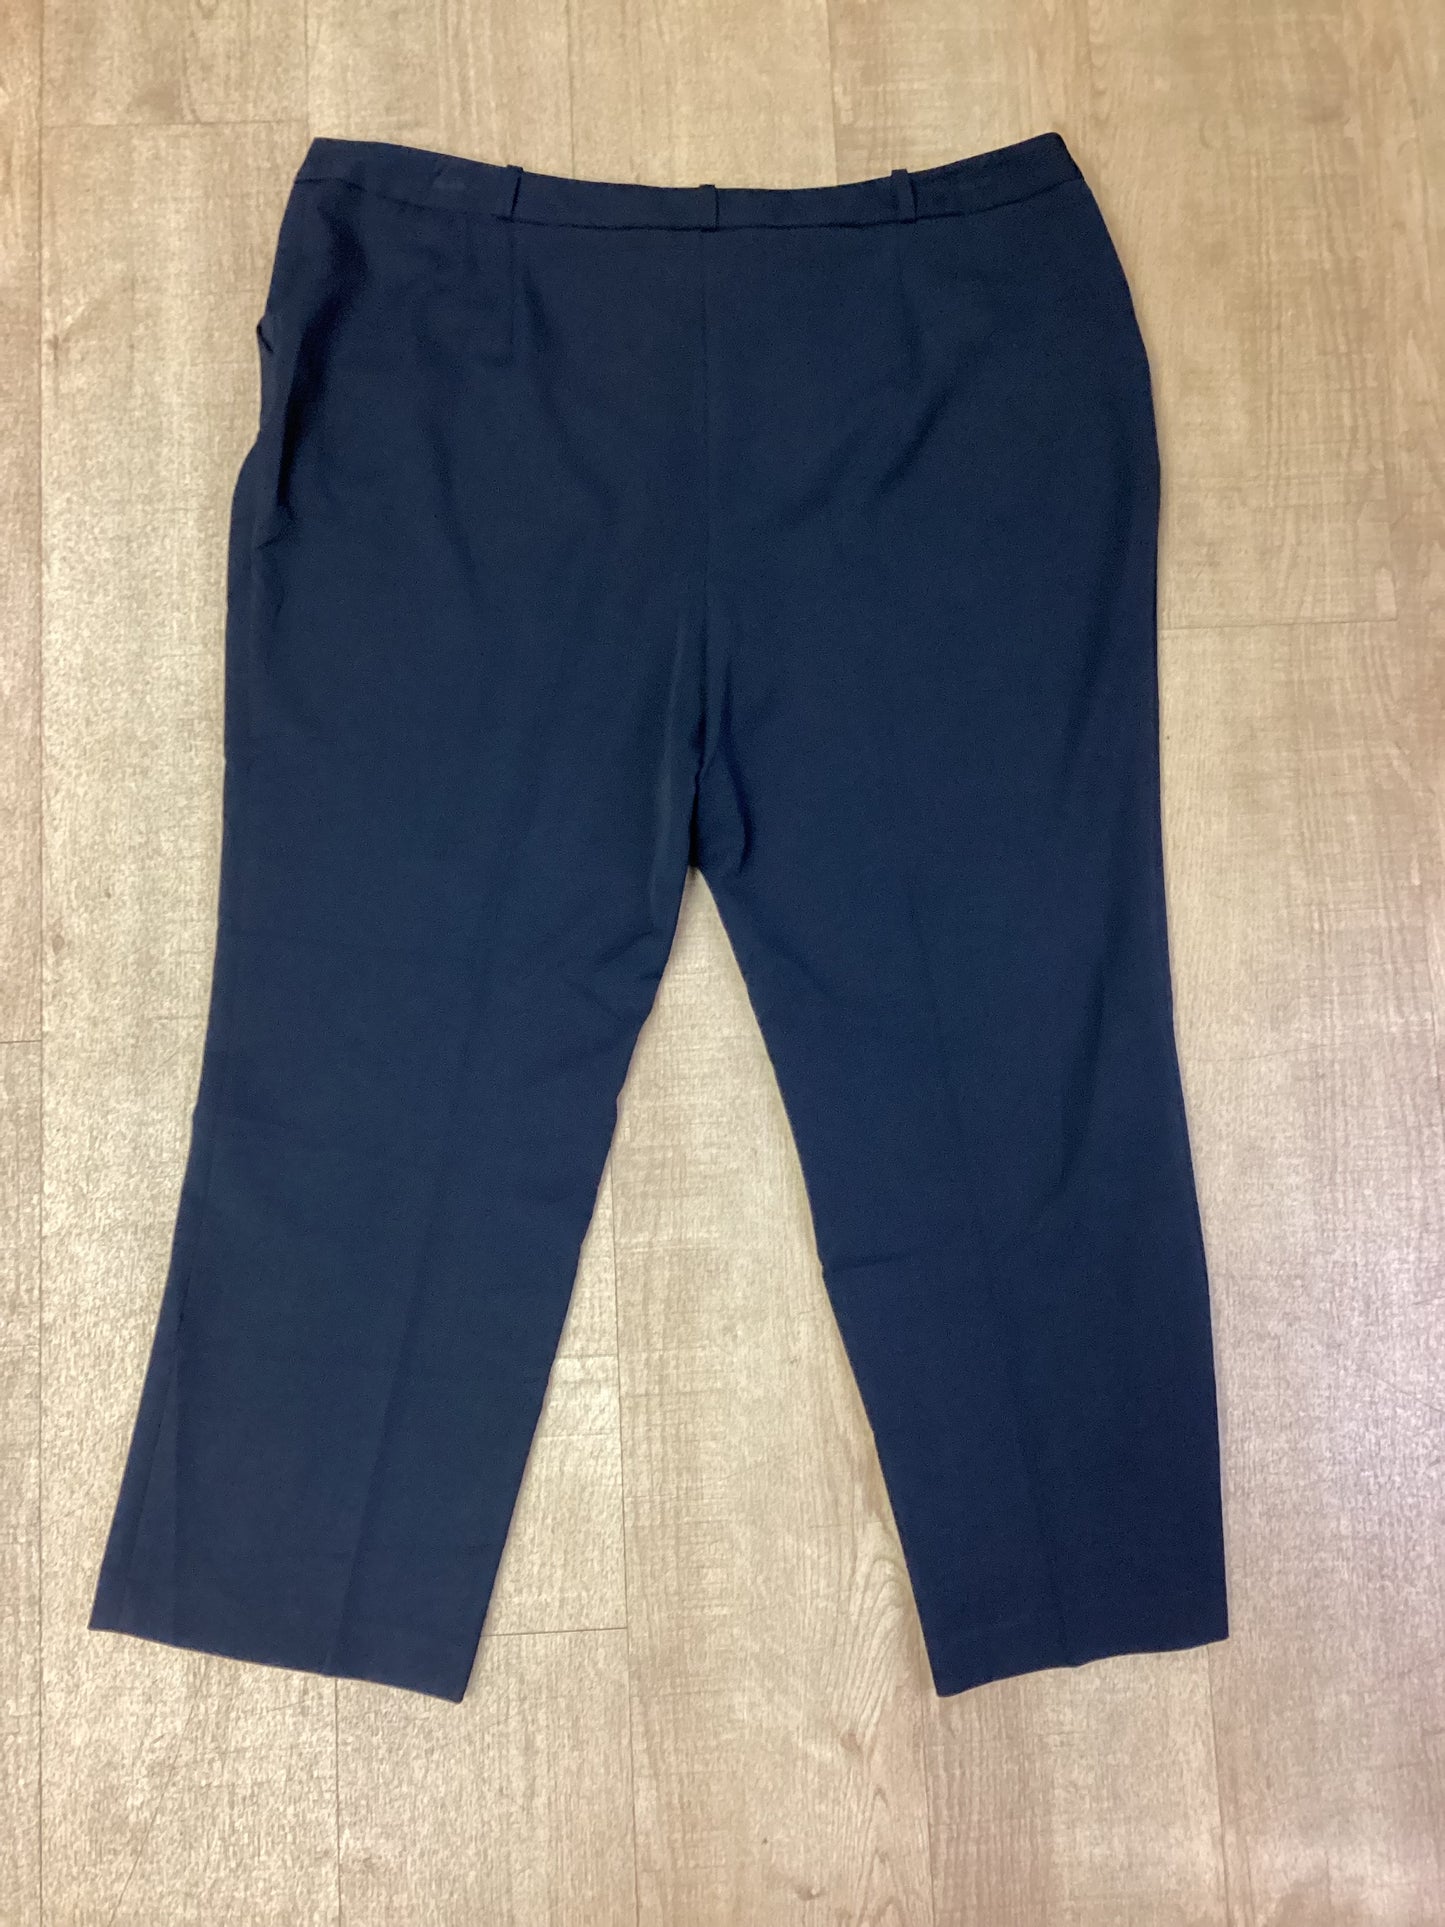 BNWT Artigiano Stretch Straight Leg Navy Blue Trousers Size 24